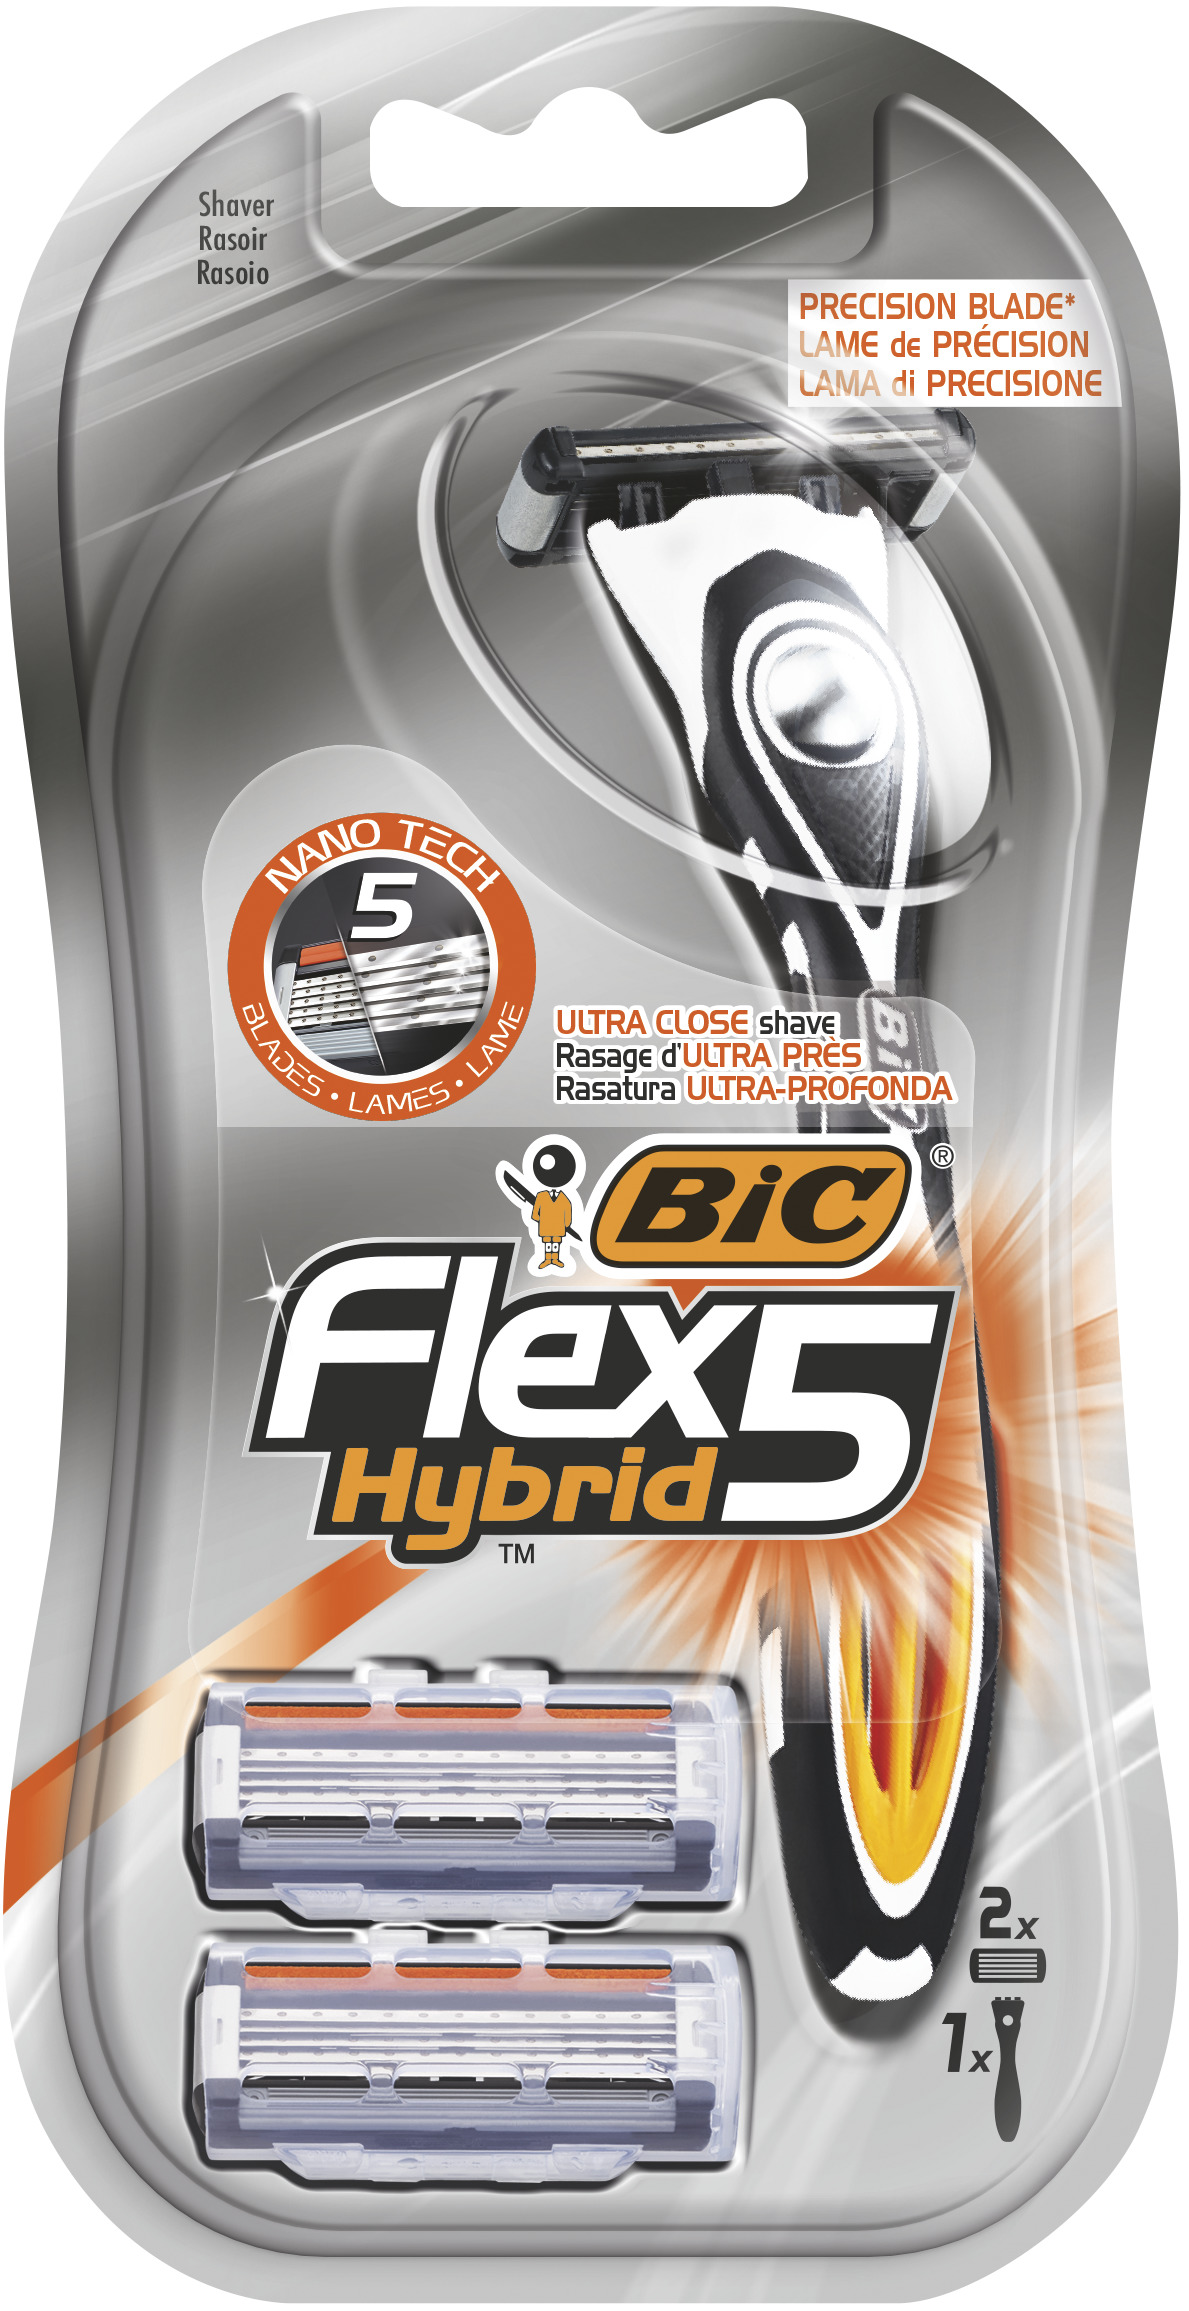 Станок для бритья BIC Flex 5 Hybrid + 2 кассеты vox станок для бритья алоэ вера 3 лезвия 1 0